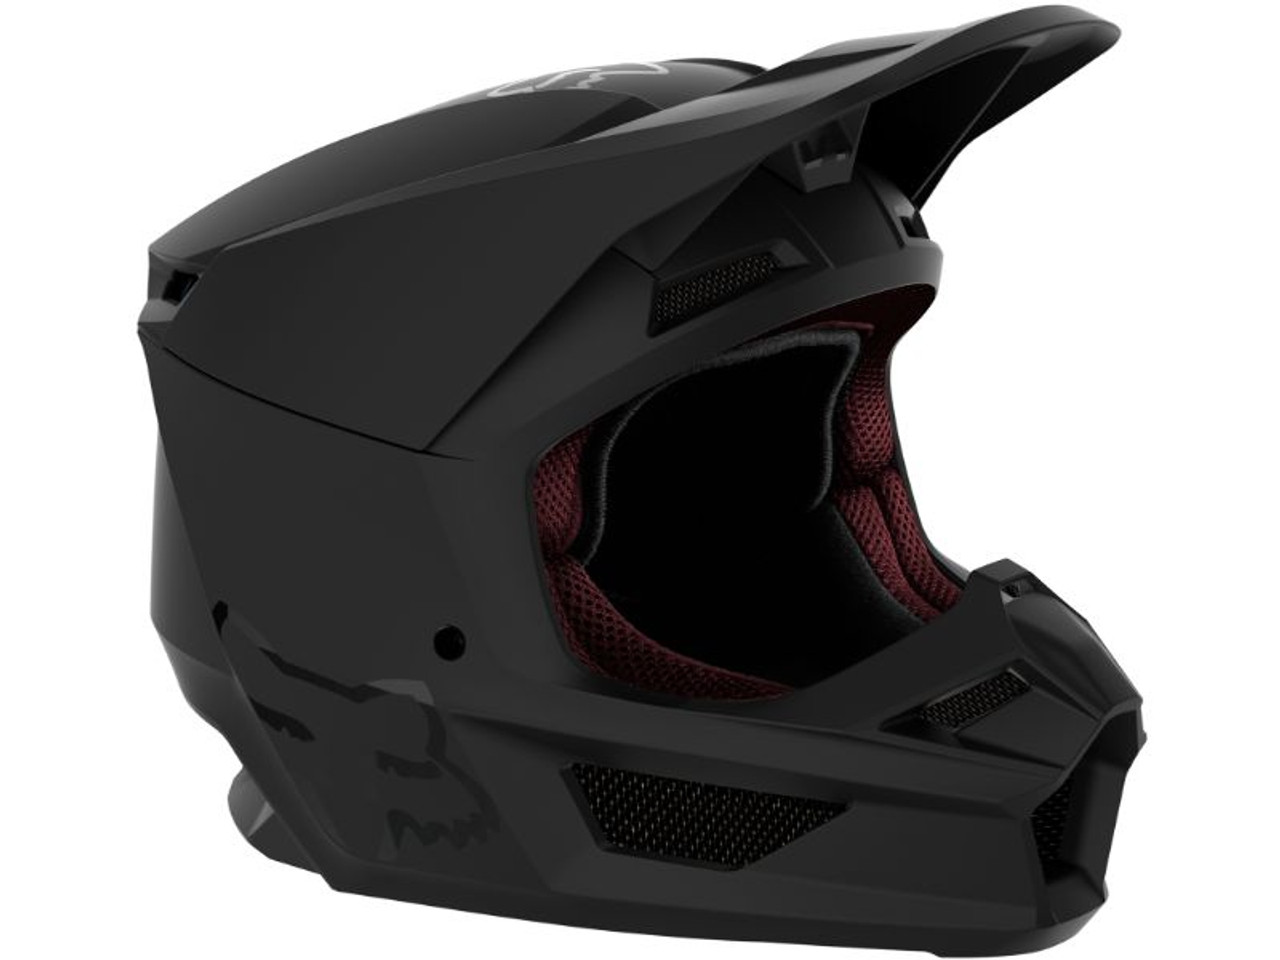 Off-Road Motorcycle Gear & Helmets